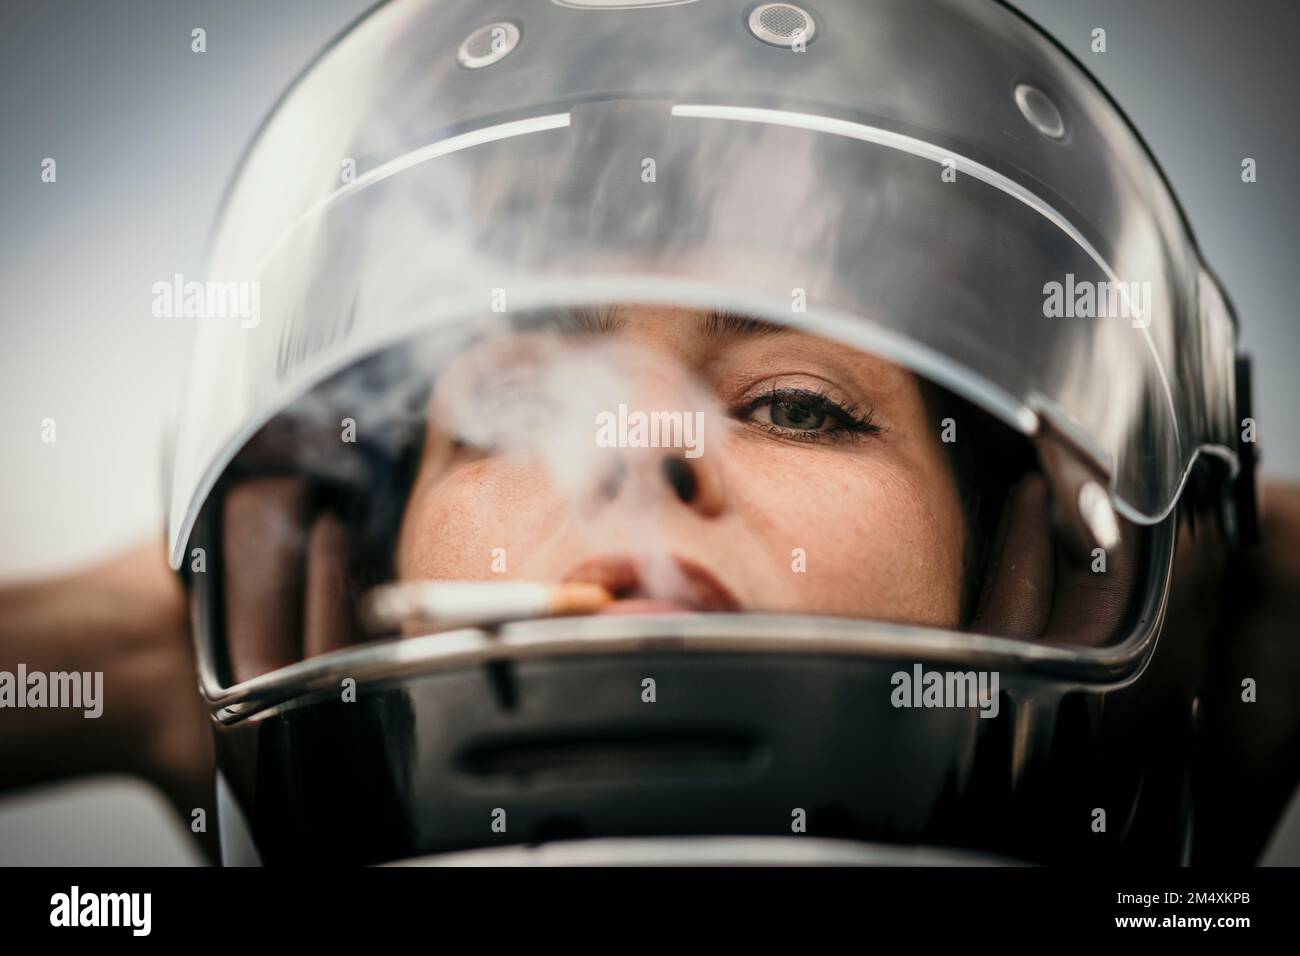 Woman wearing helmet smoking cigarette Stock Photo